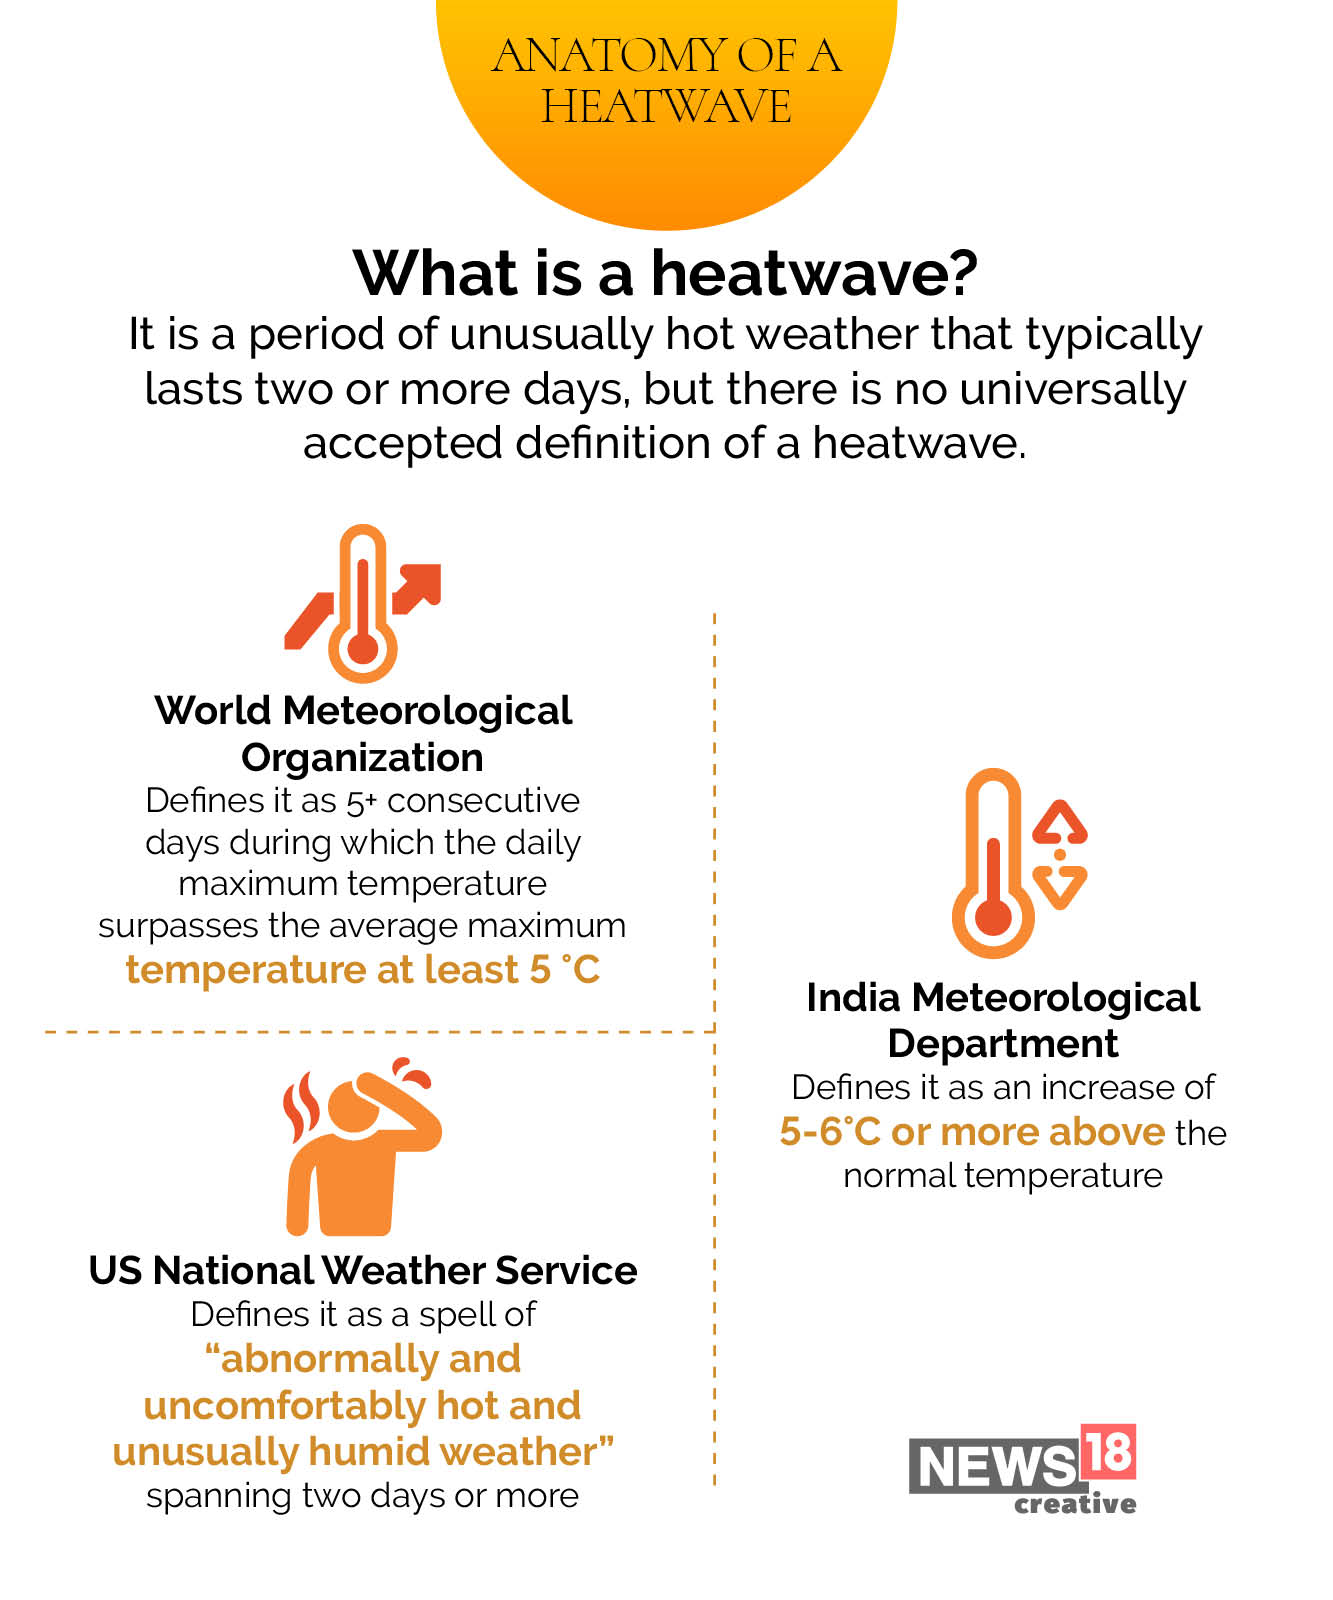 The anatomy of a heatwave